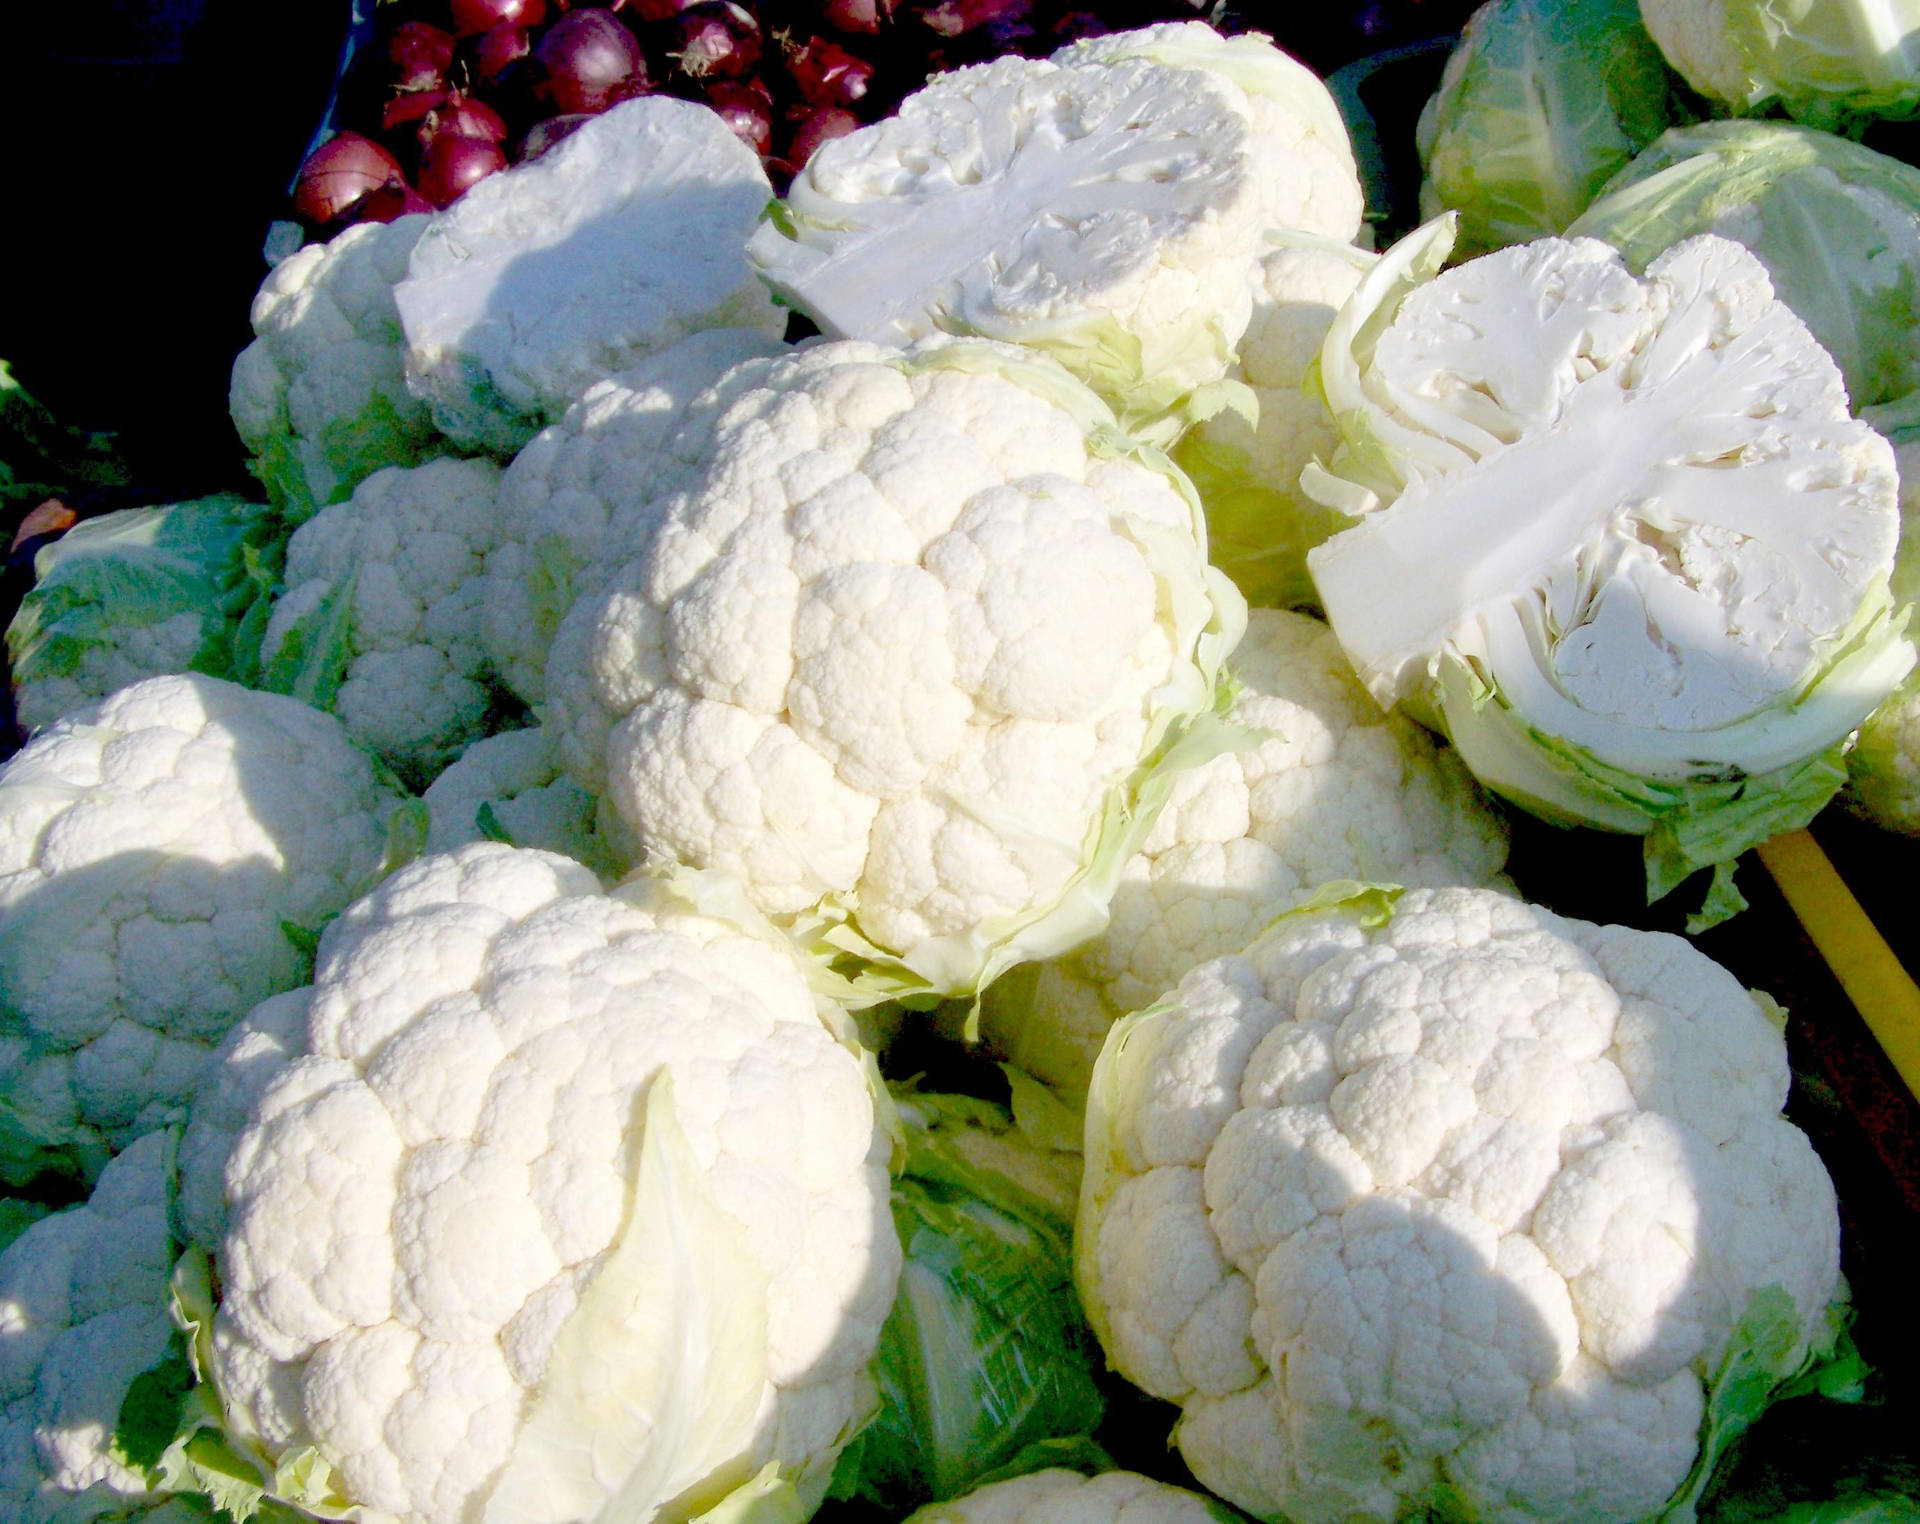 Cauliflowersunbeam Can Be Translated To Spanish As 